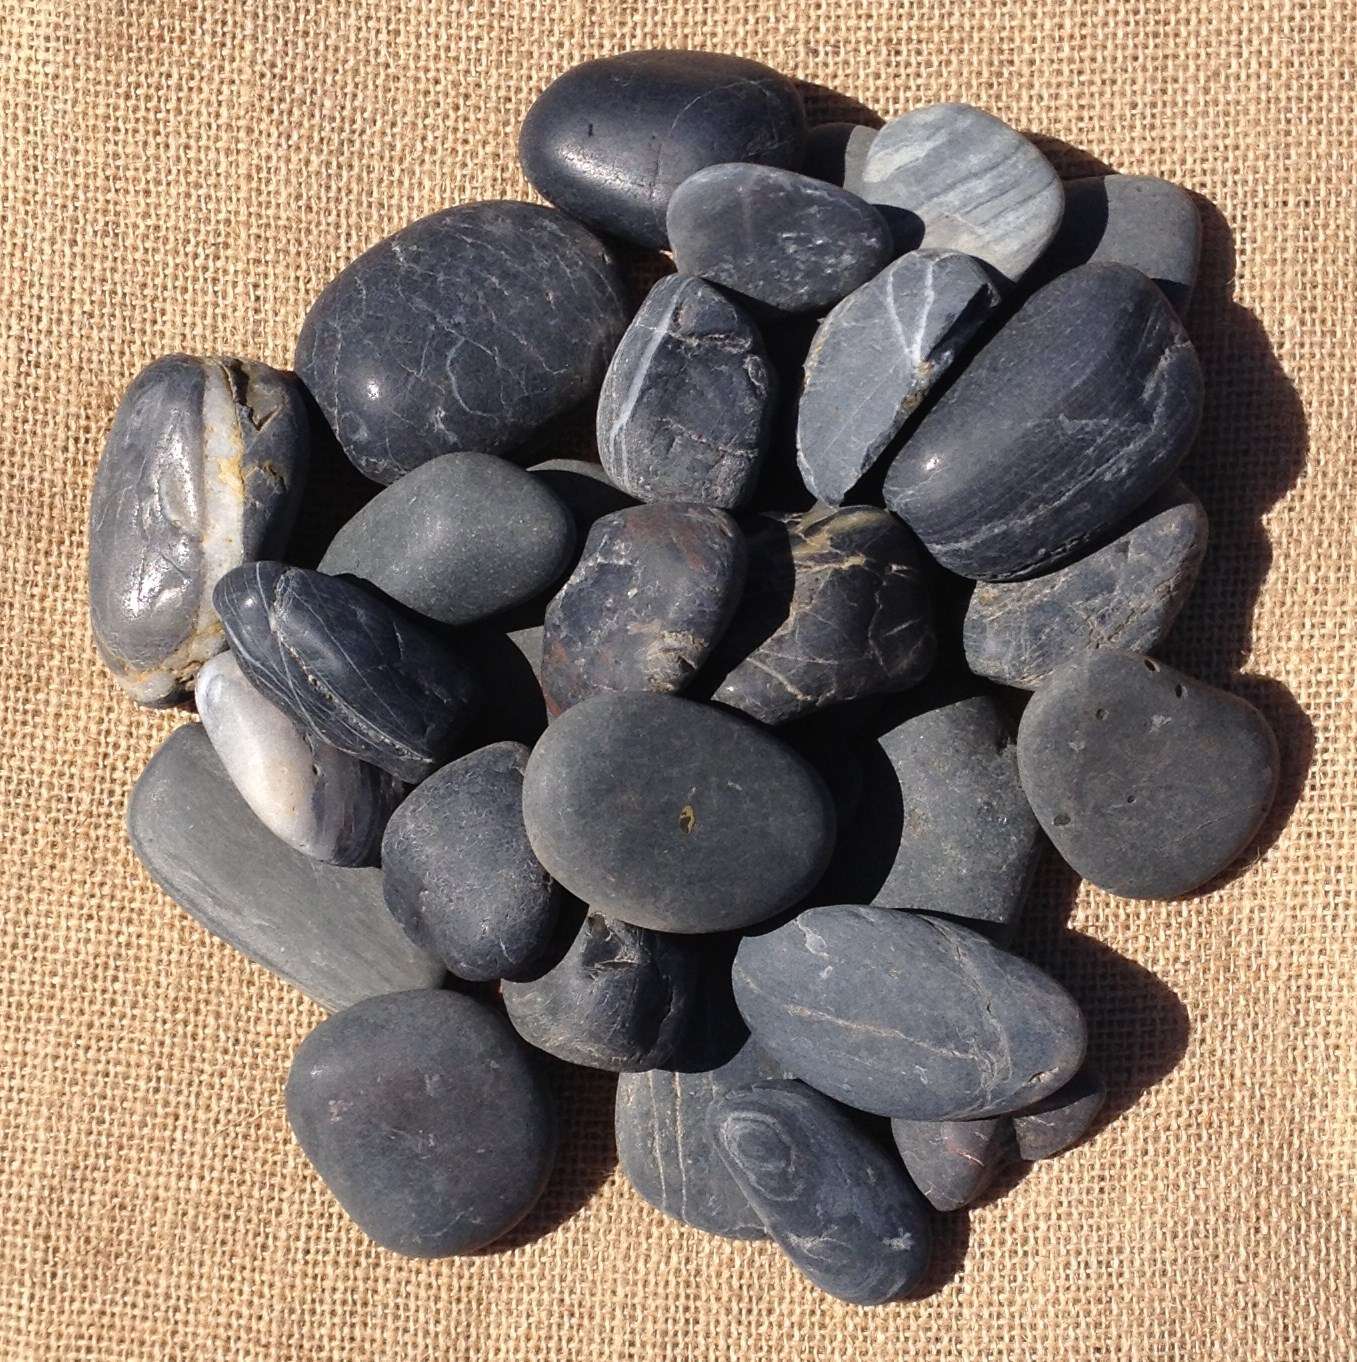 Black Polished Pebbles 20 - 40mm